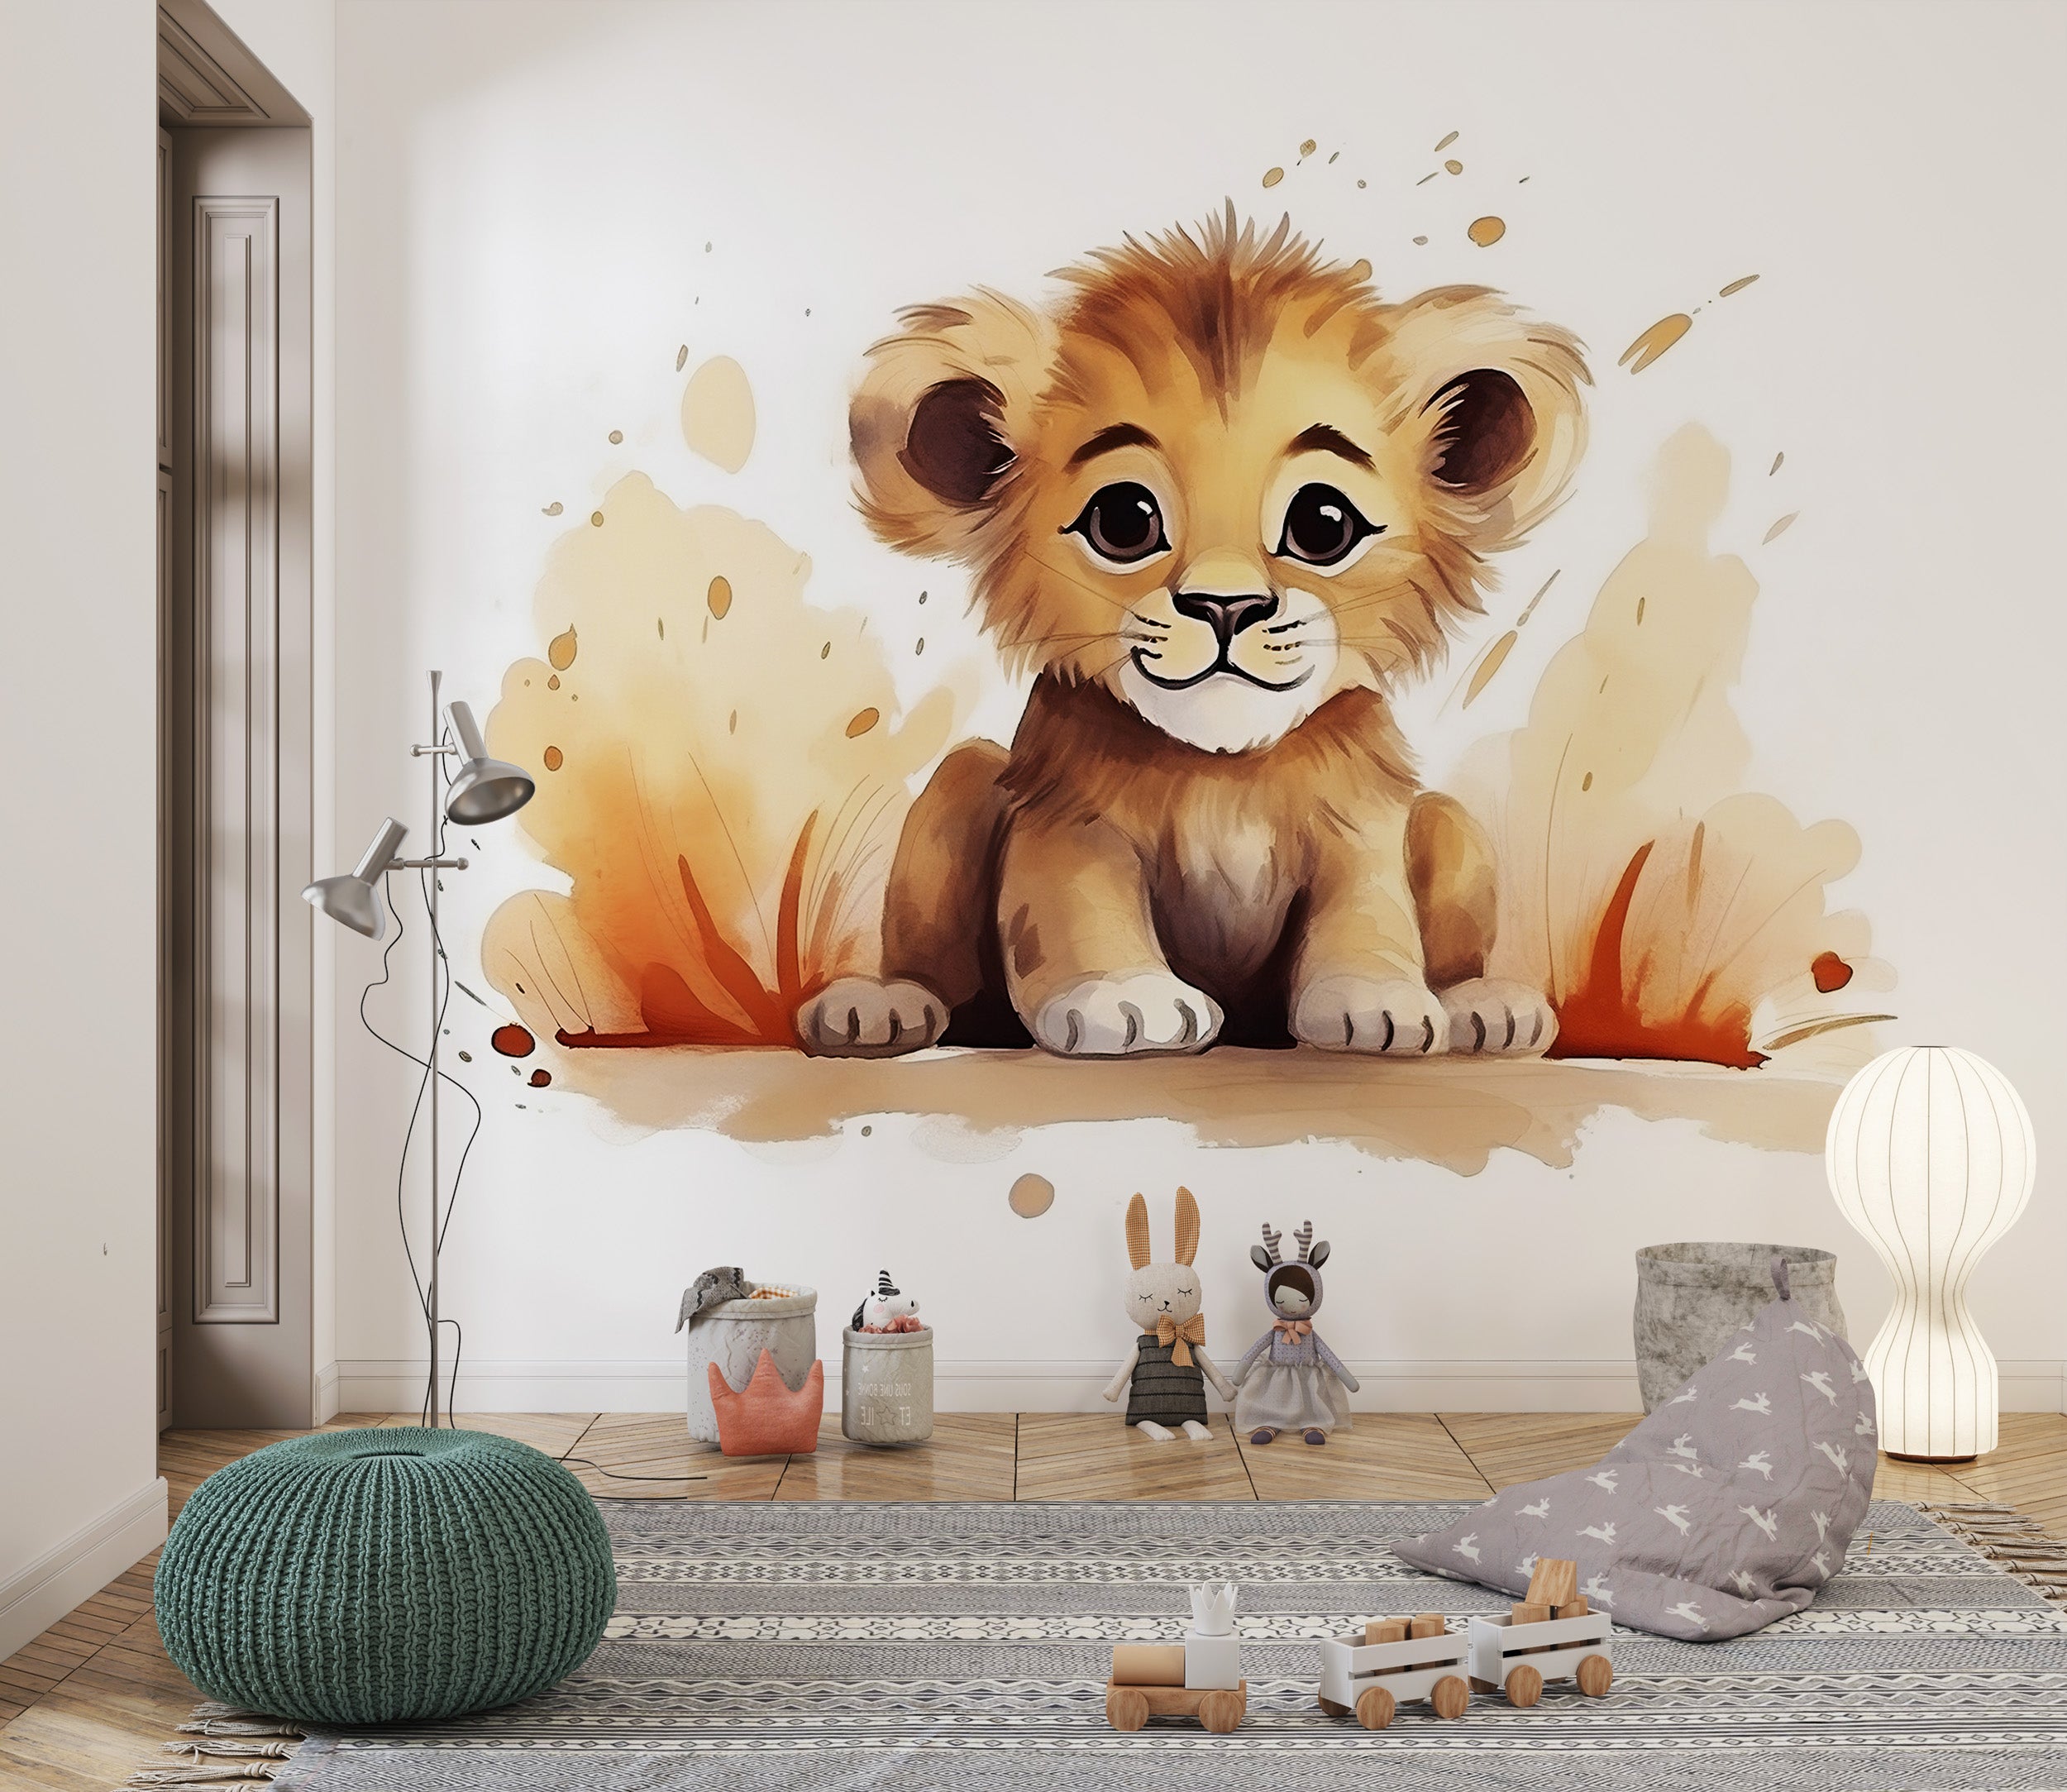 Safari-Inspired Nursery Decor - Cute Lion